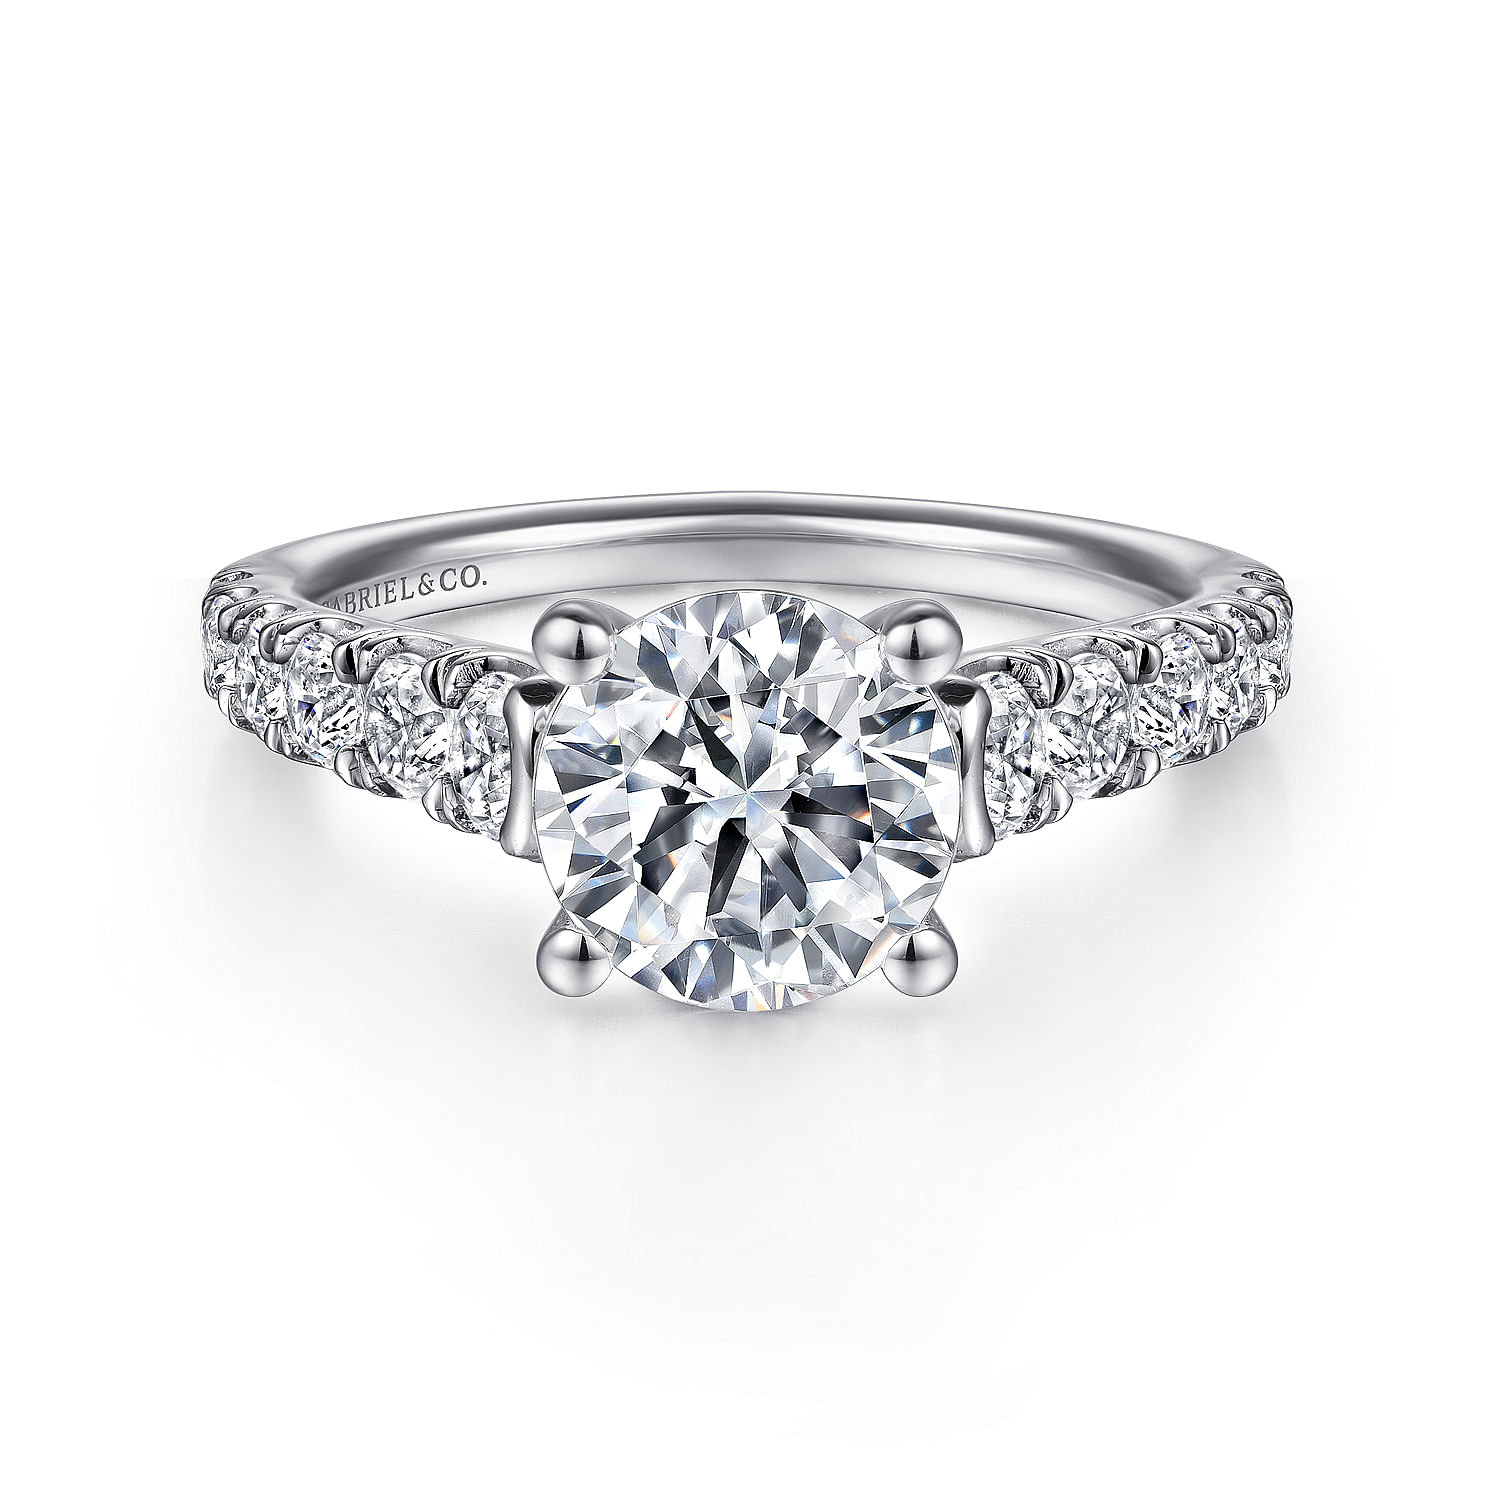 Piper - 14K White Gold Round Diamond Engagement Ring